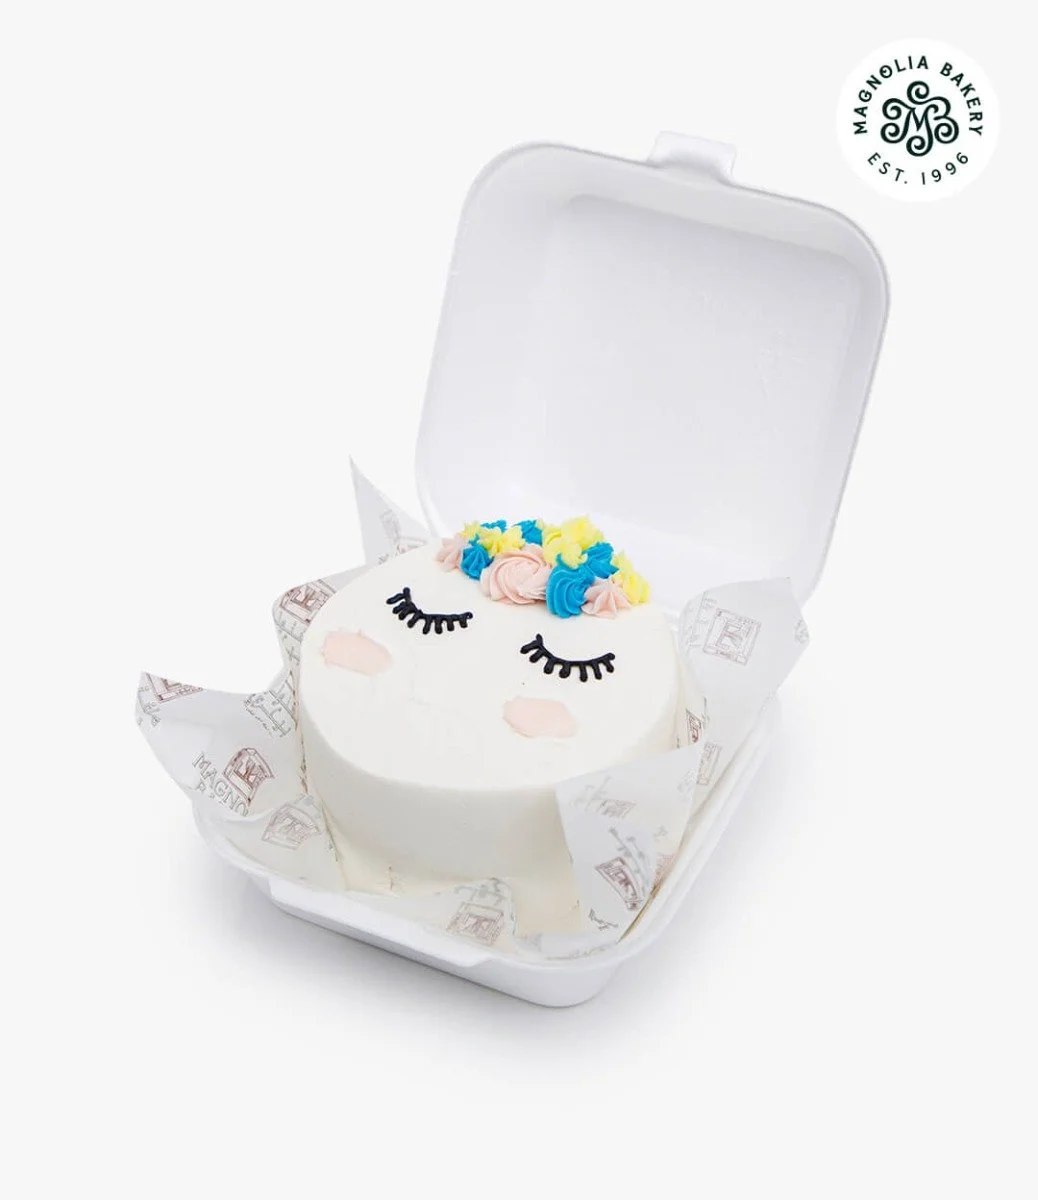 Unicorn Lunch Box Cake By Magnolia